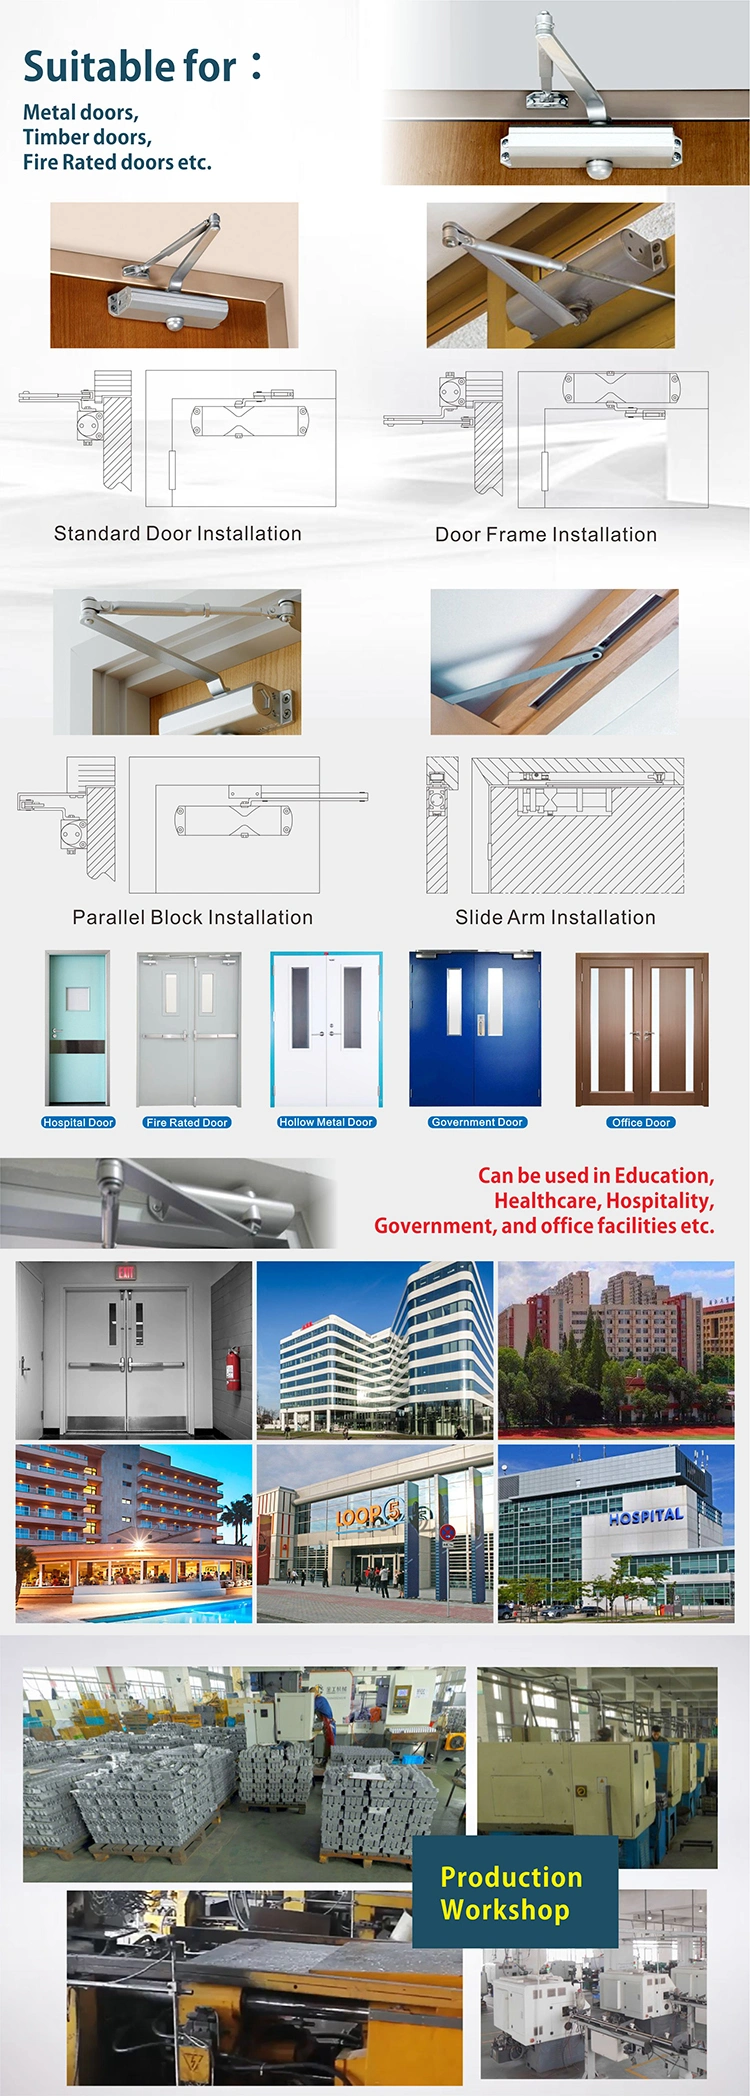 CE UL Door Furniture Hardware Fittings Security Aluminium Automatic Adjustable Door Control Fire Rated Door Closer